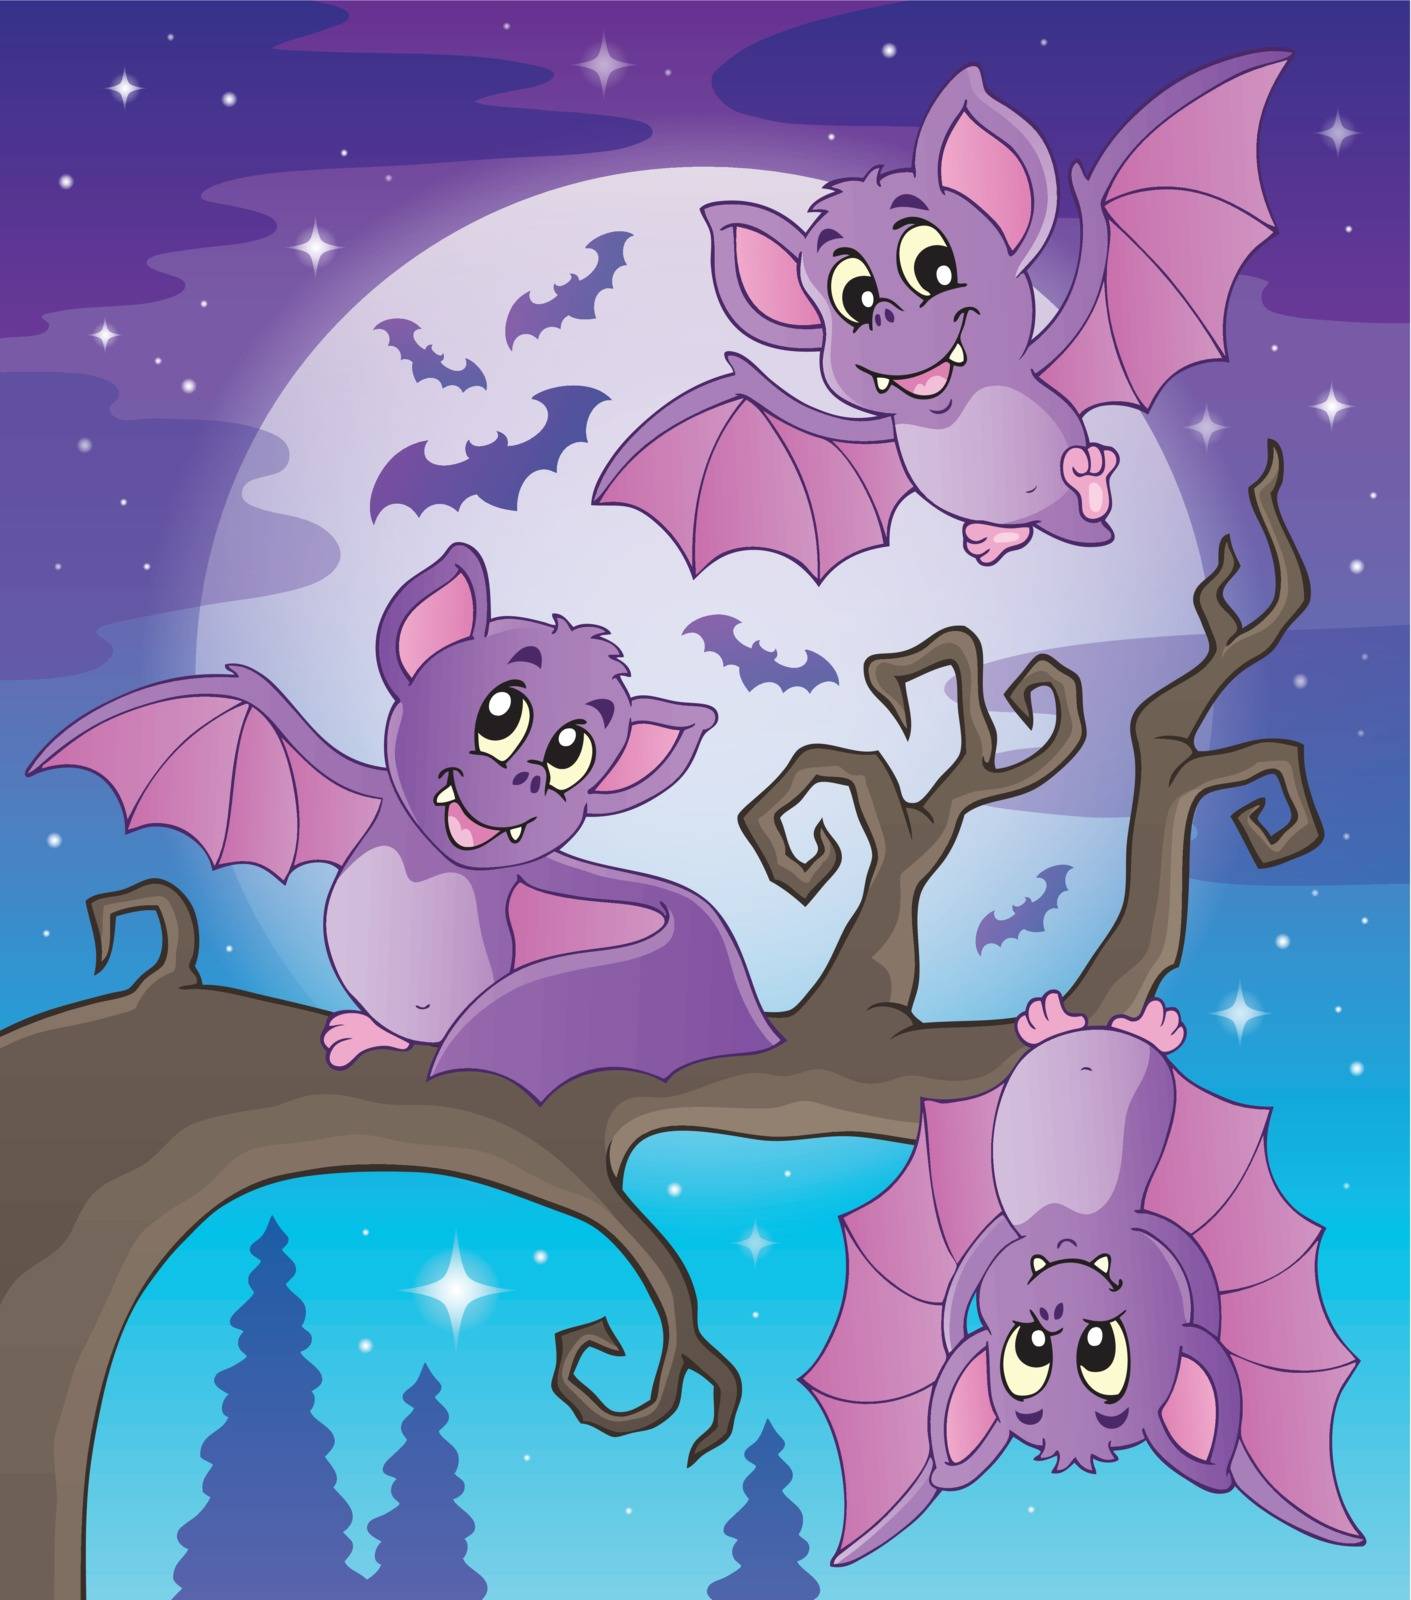 Bats theme image 4 - eps10 vector illustration.